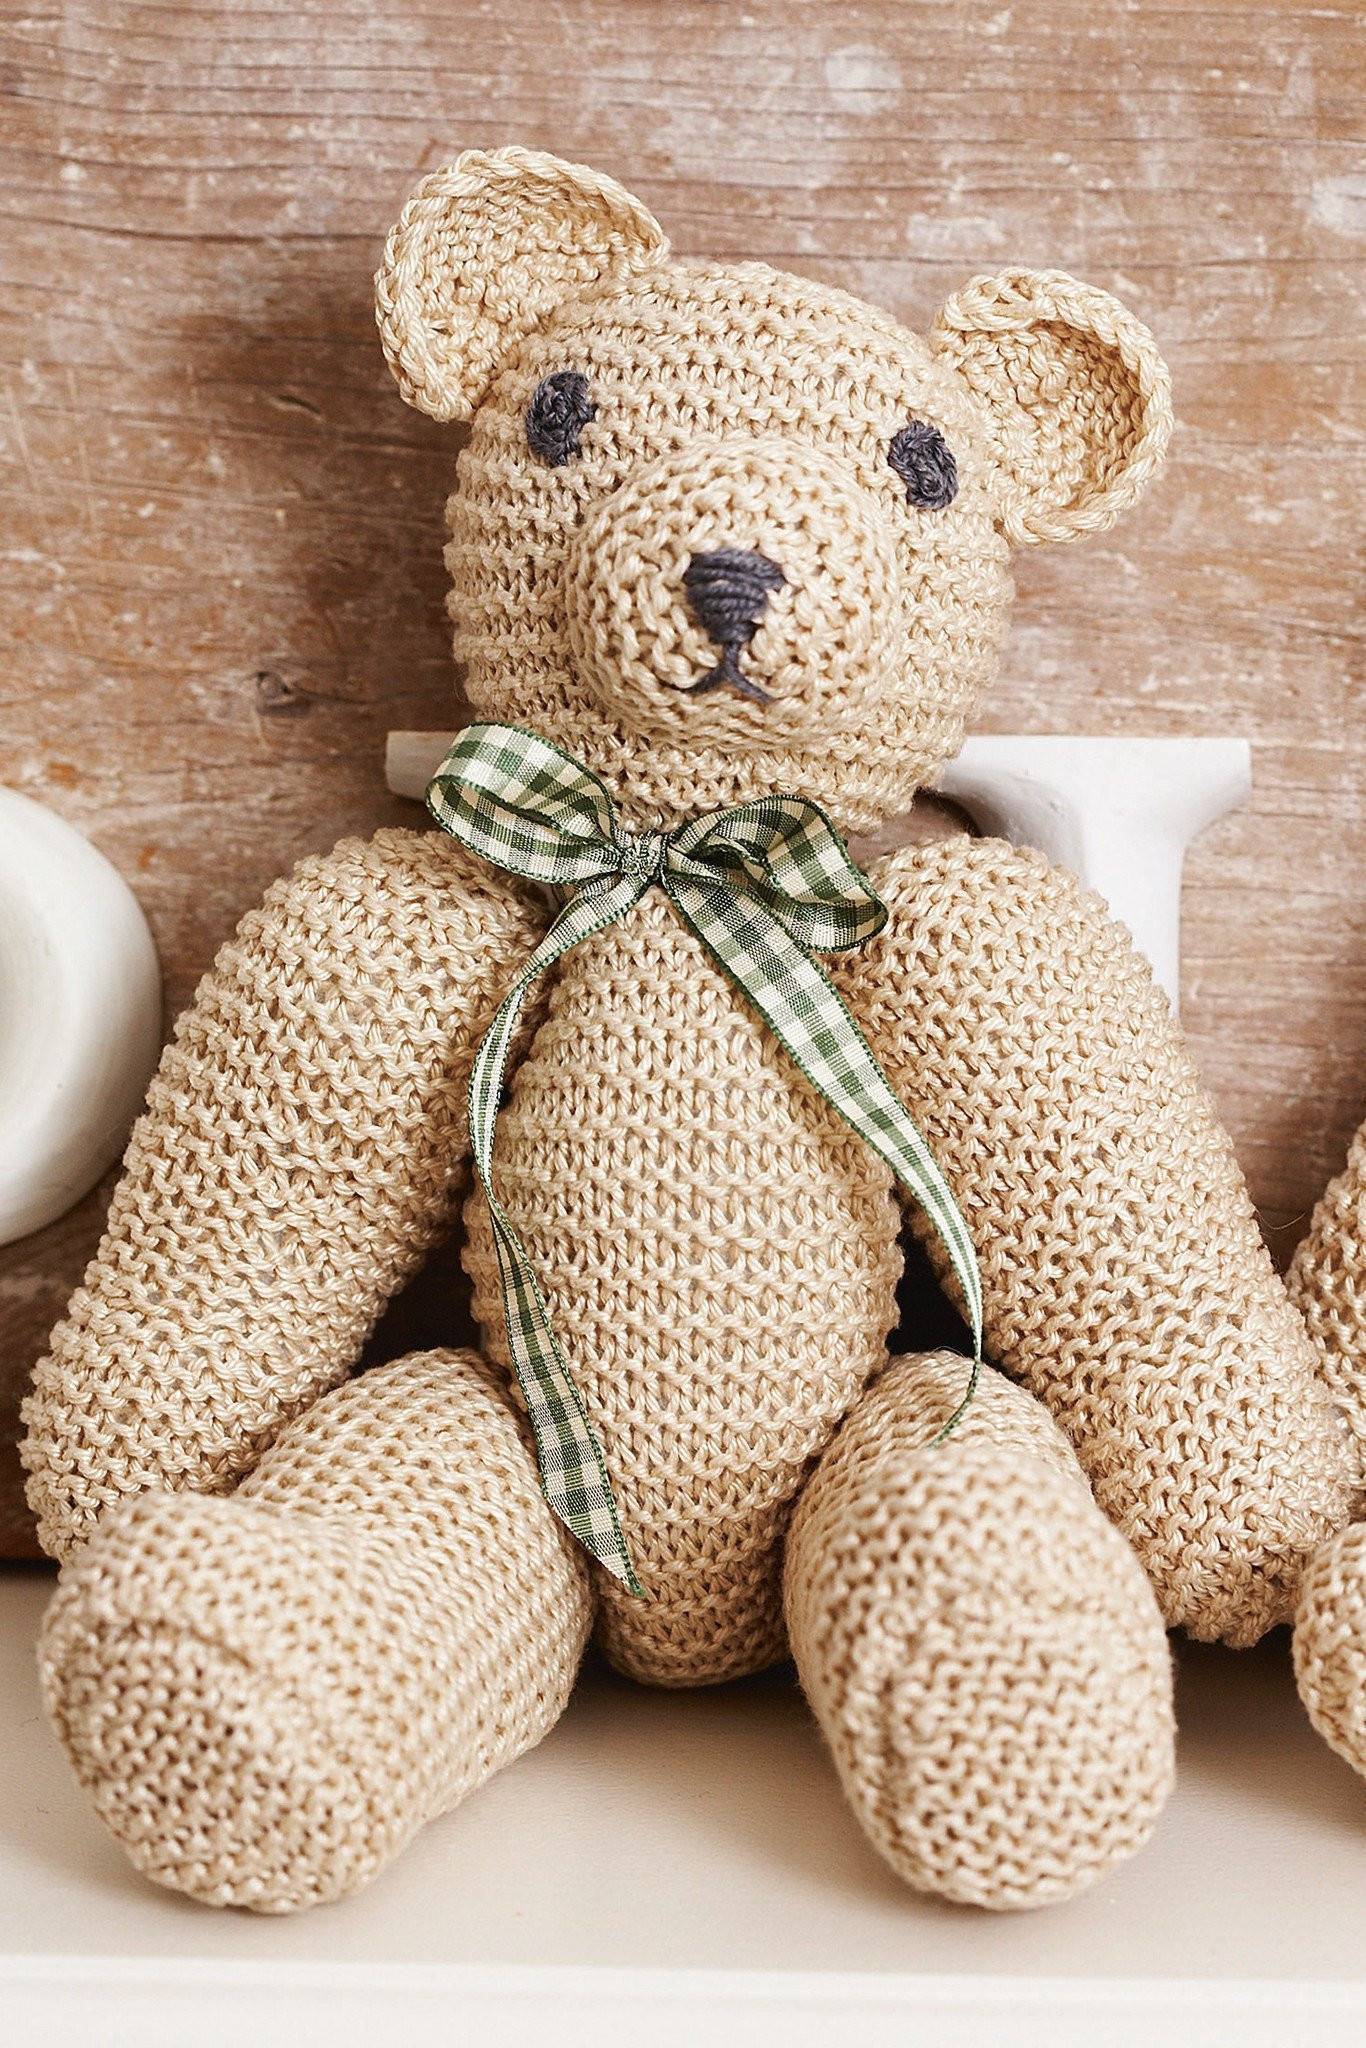 Vintage Teddy Bears Knitting Pattern | The Knitting Network